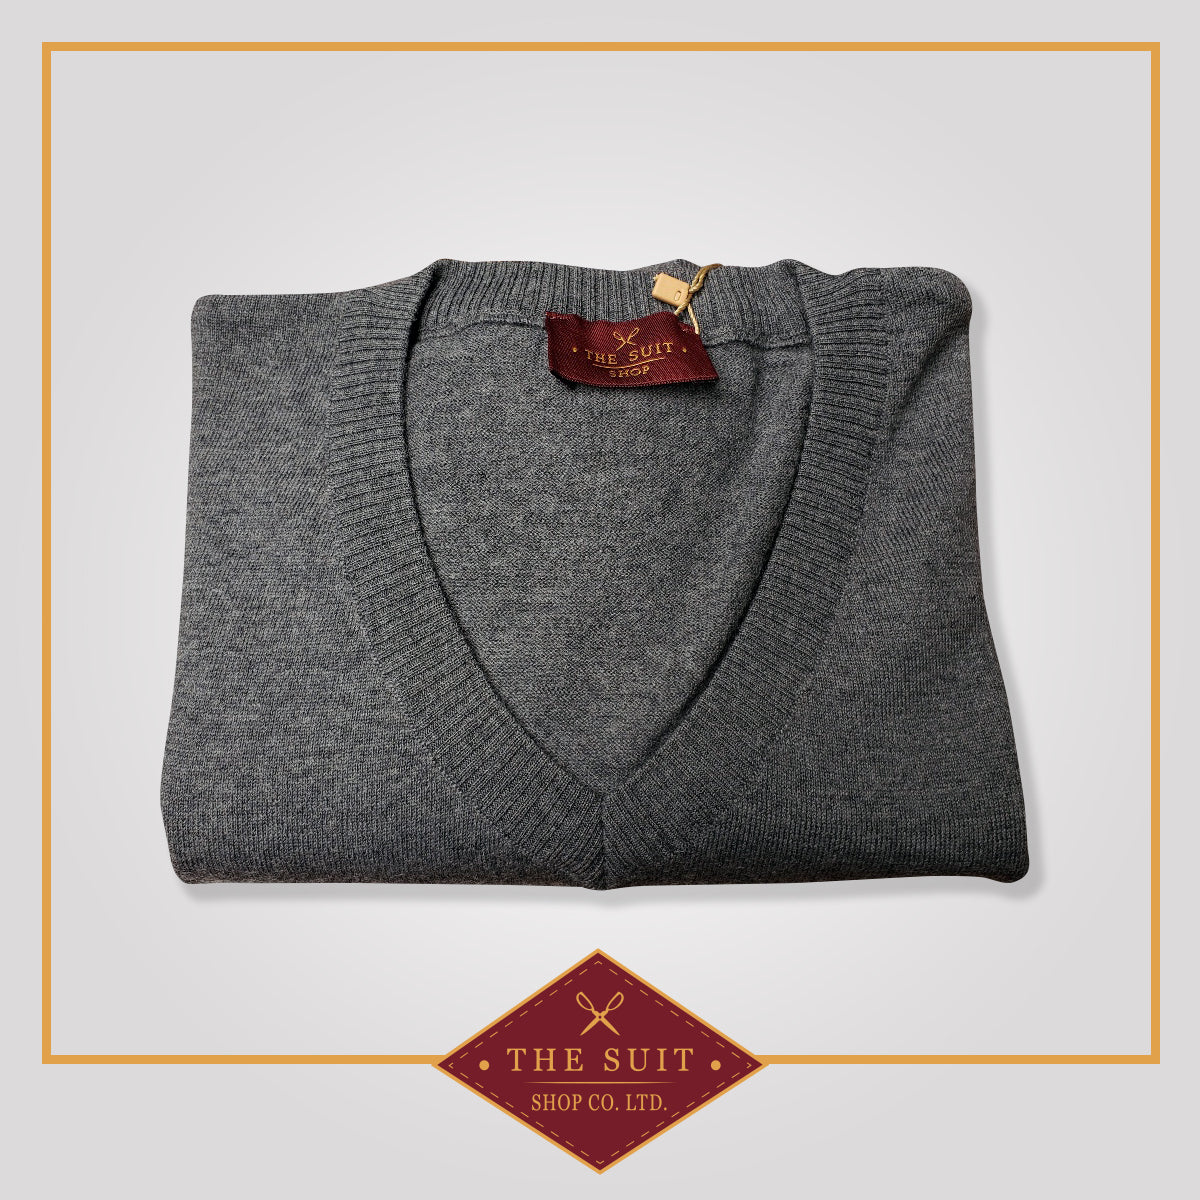 Dark Grey Merino V-Neck Wool Sweater